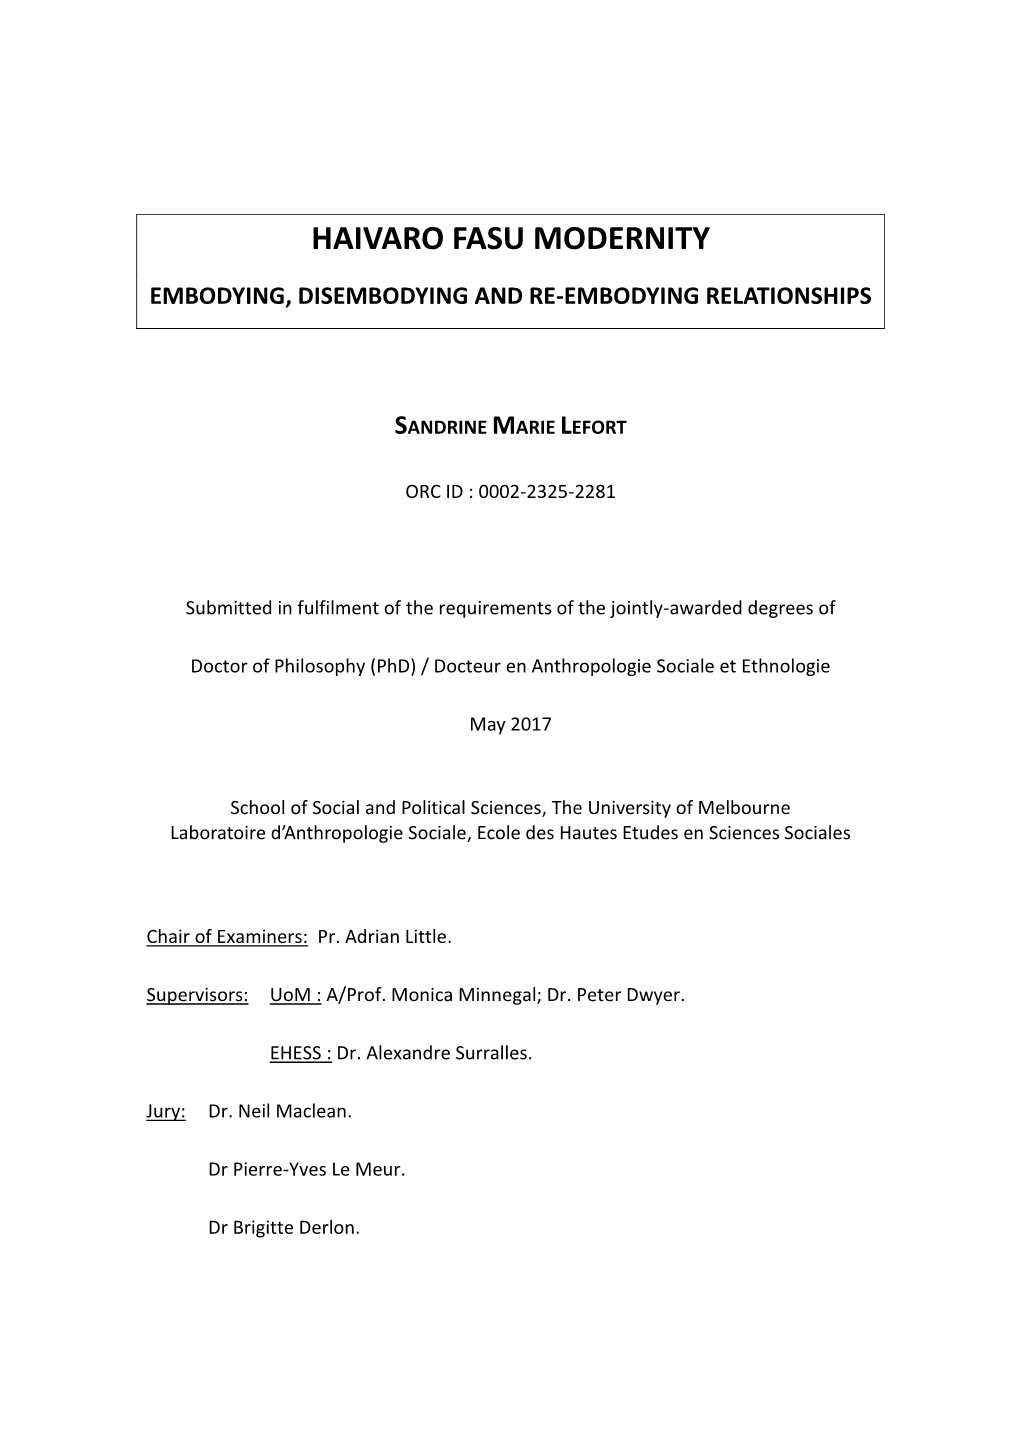 Haivaro Fasu Modernity